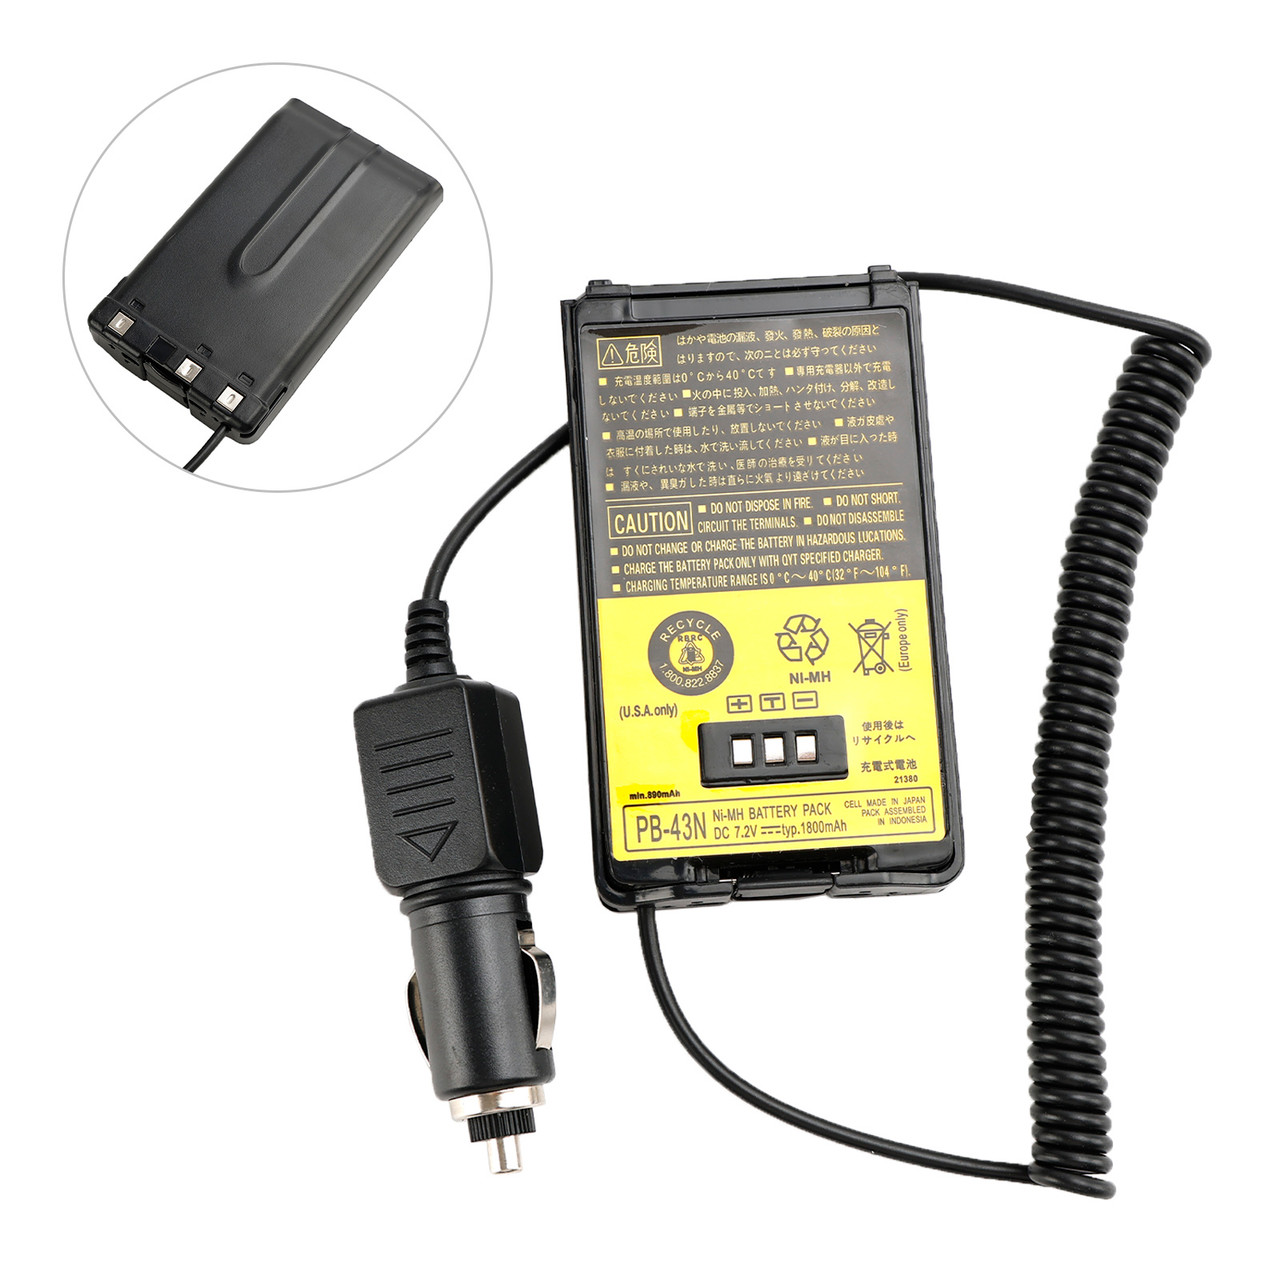 Car Charger Battery PB-43 Eliminator Adapter For TH-K2AT K4AT K255A K2ET Radio